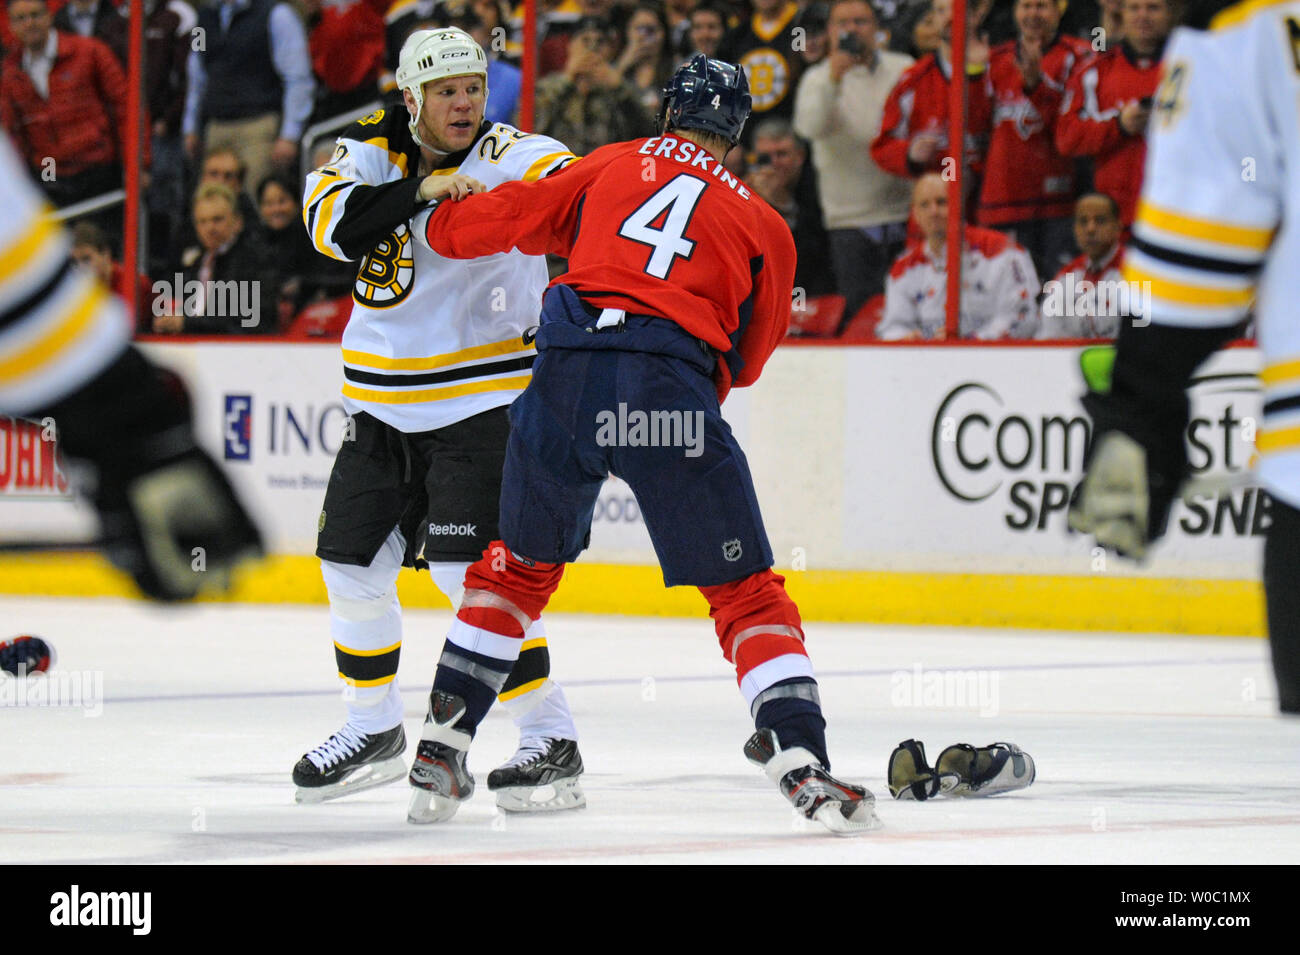 Banged up Shawn Thornton to sit as Boston Bruins host Toronto